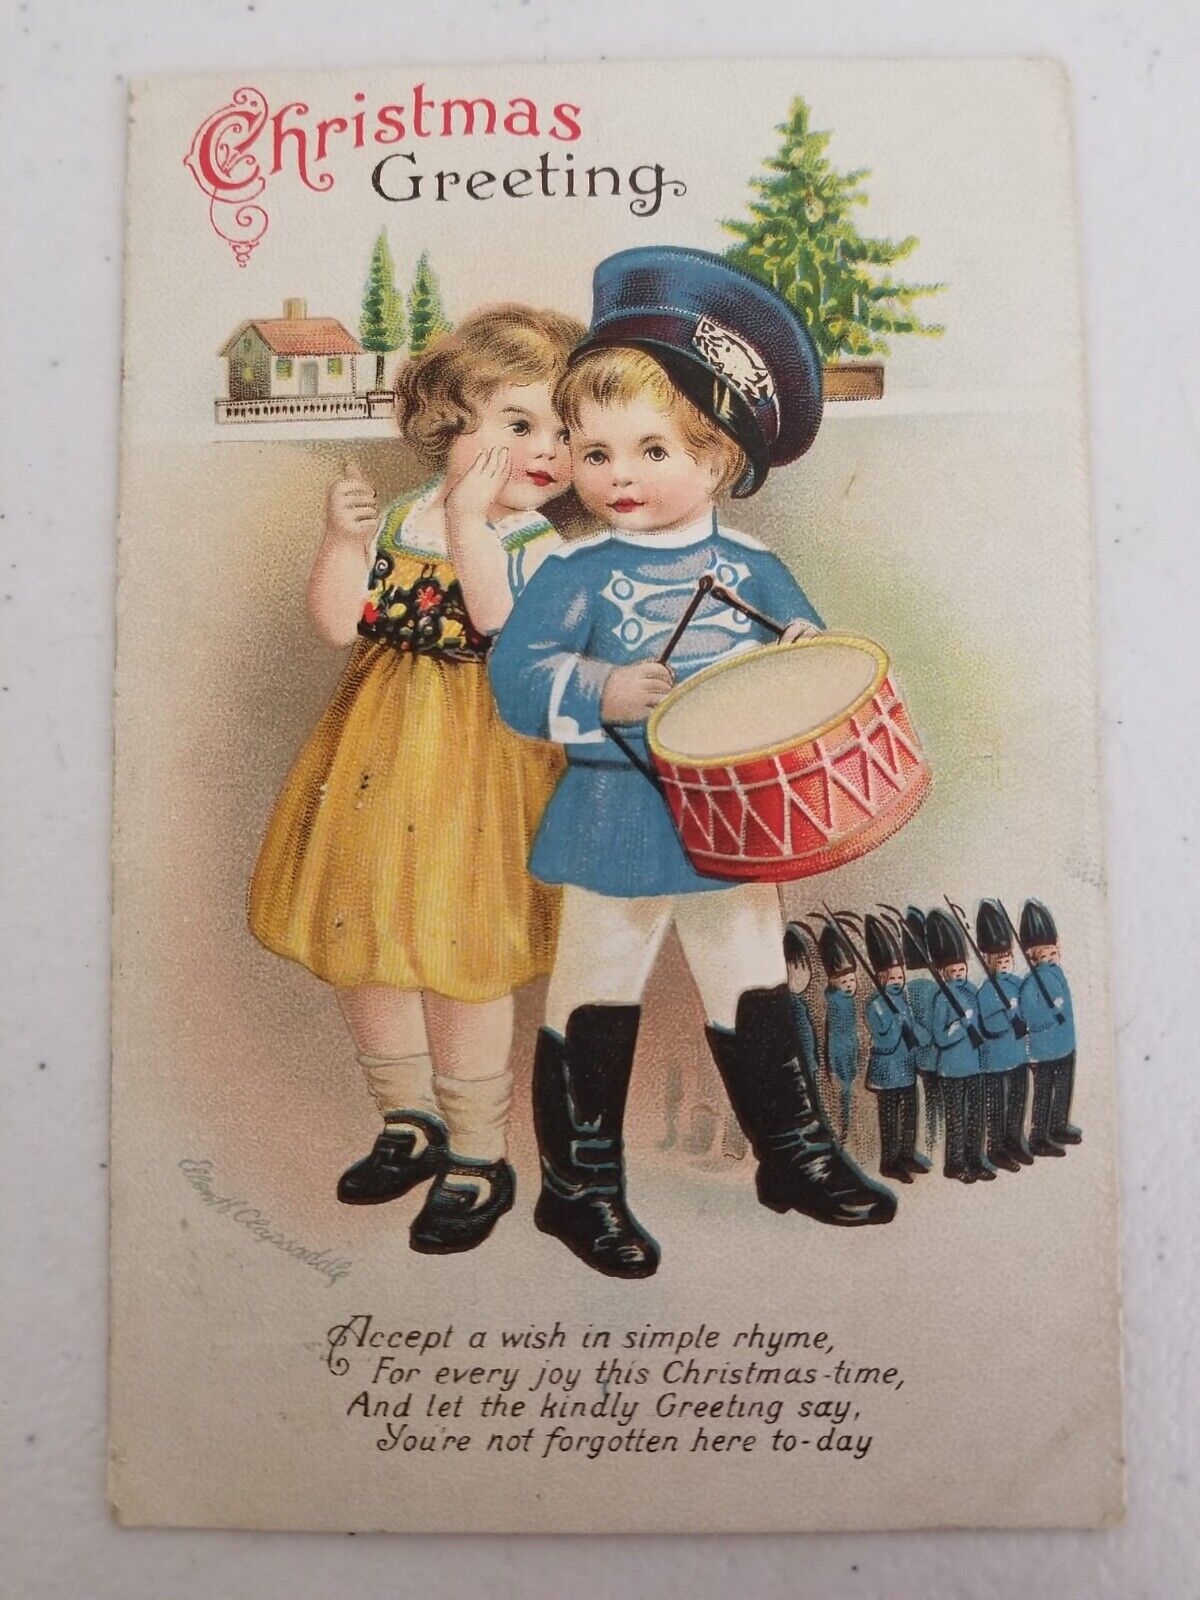 Vintage Christmas Postcards Lot of 3 - Santa, Children, Drum - Early 1900s Collectibles - TreasuTiques